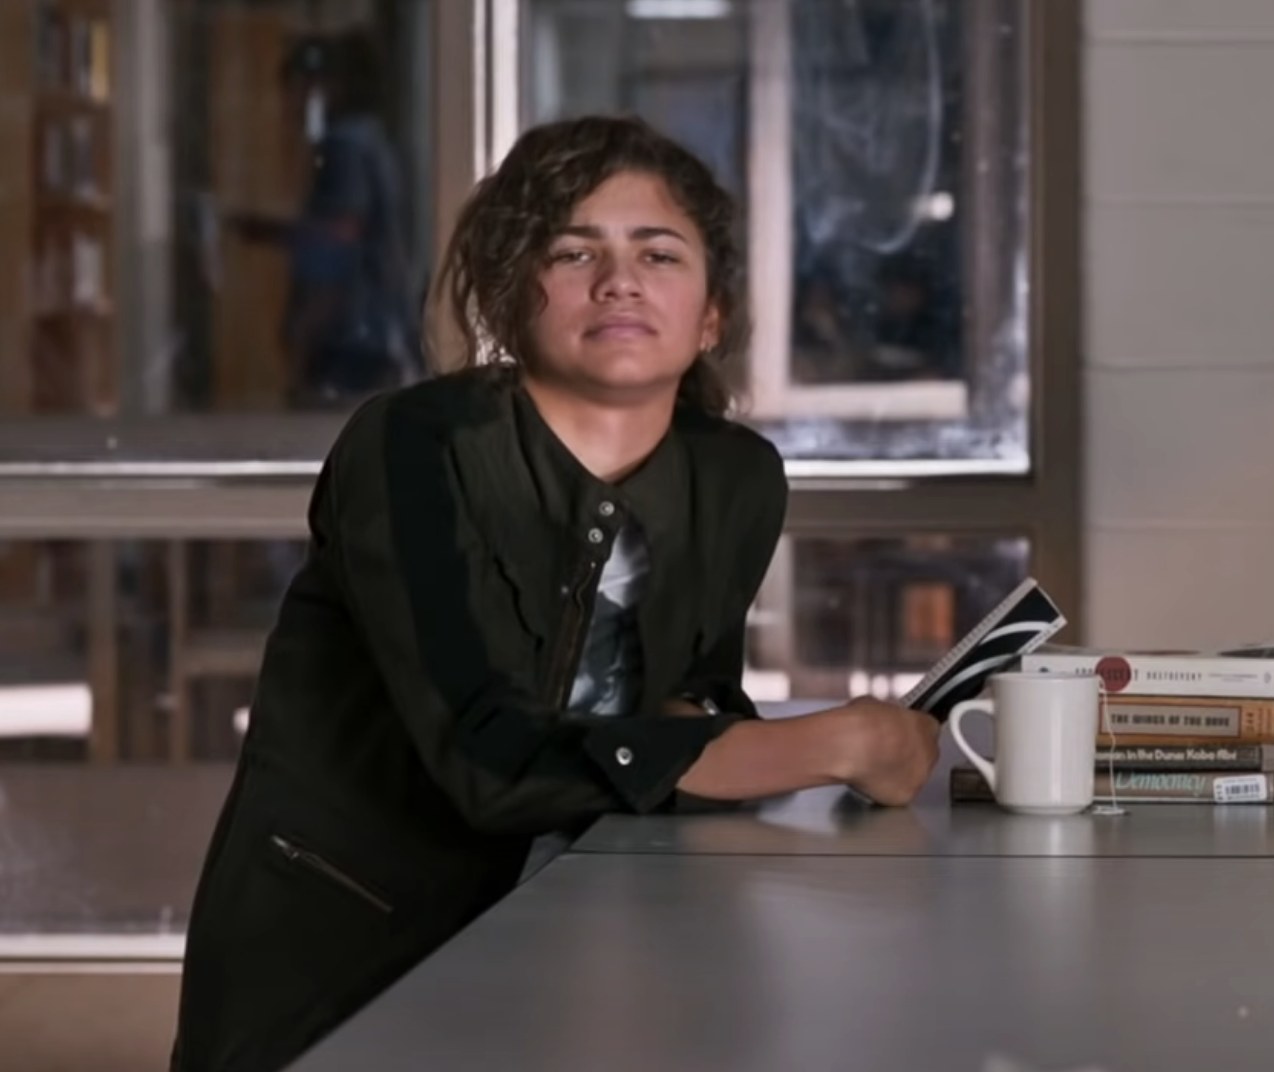 Zendaya as MJ sitting in the school cafeteria